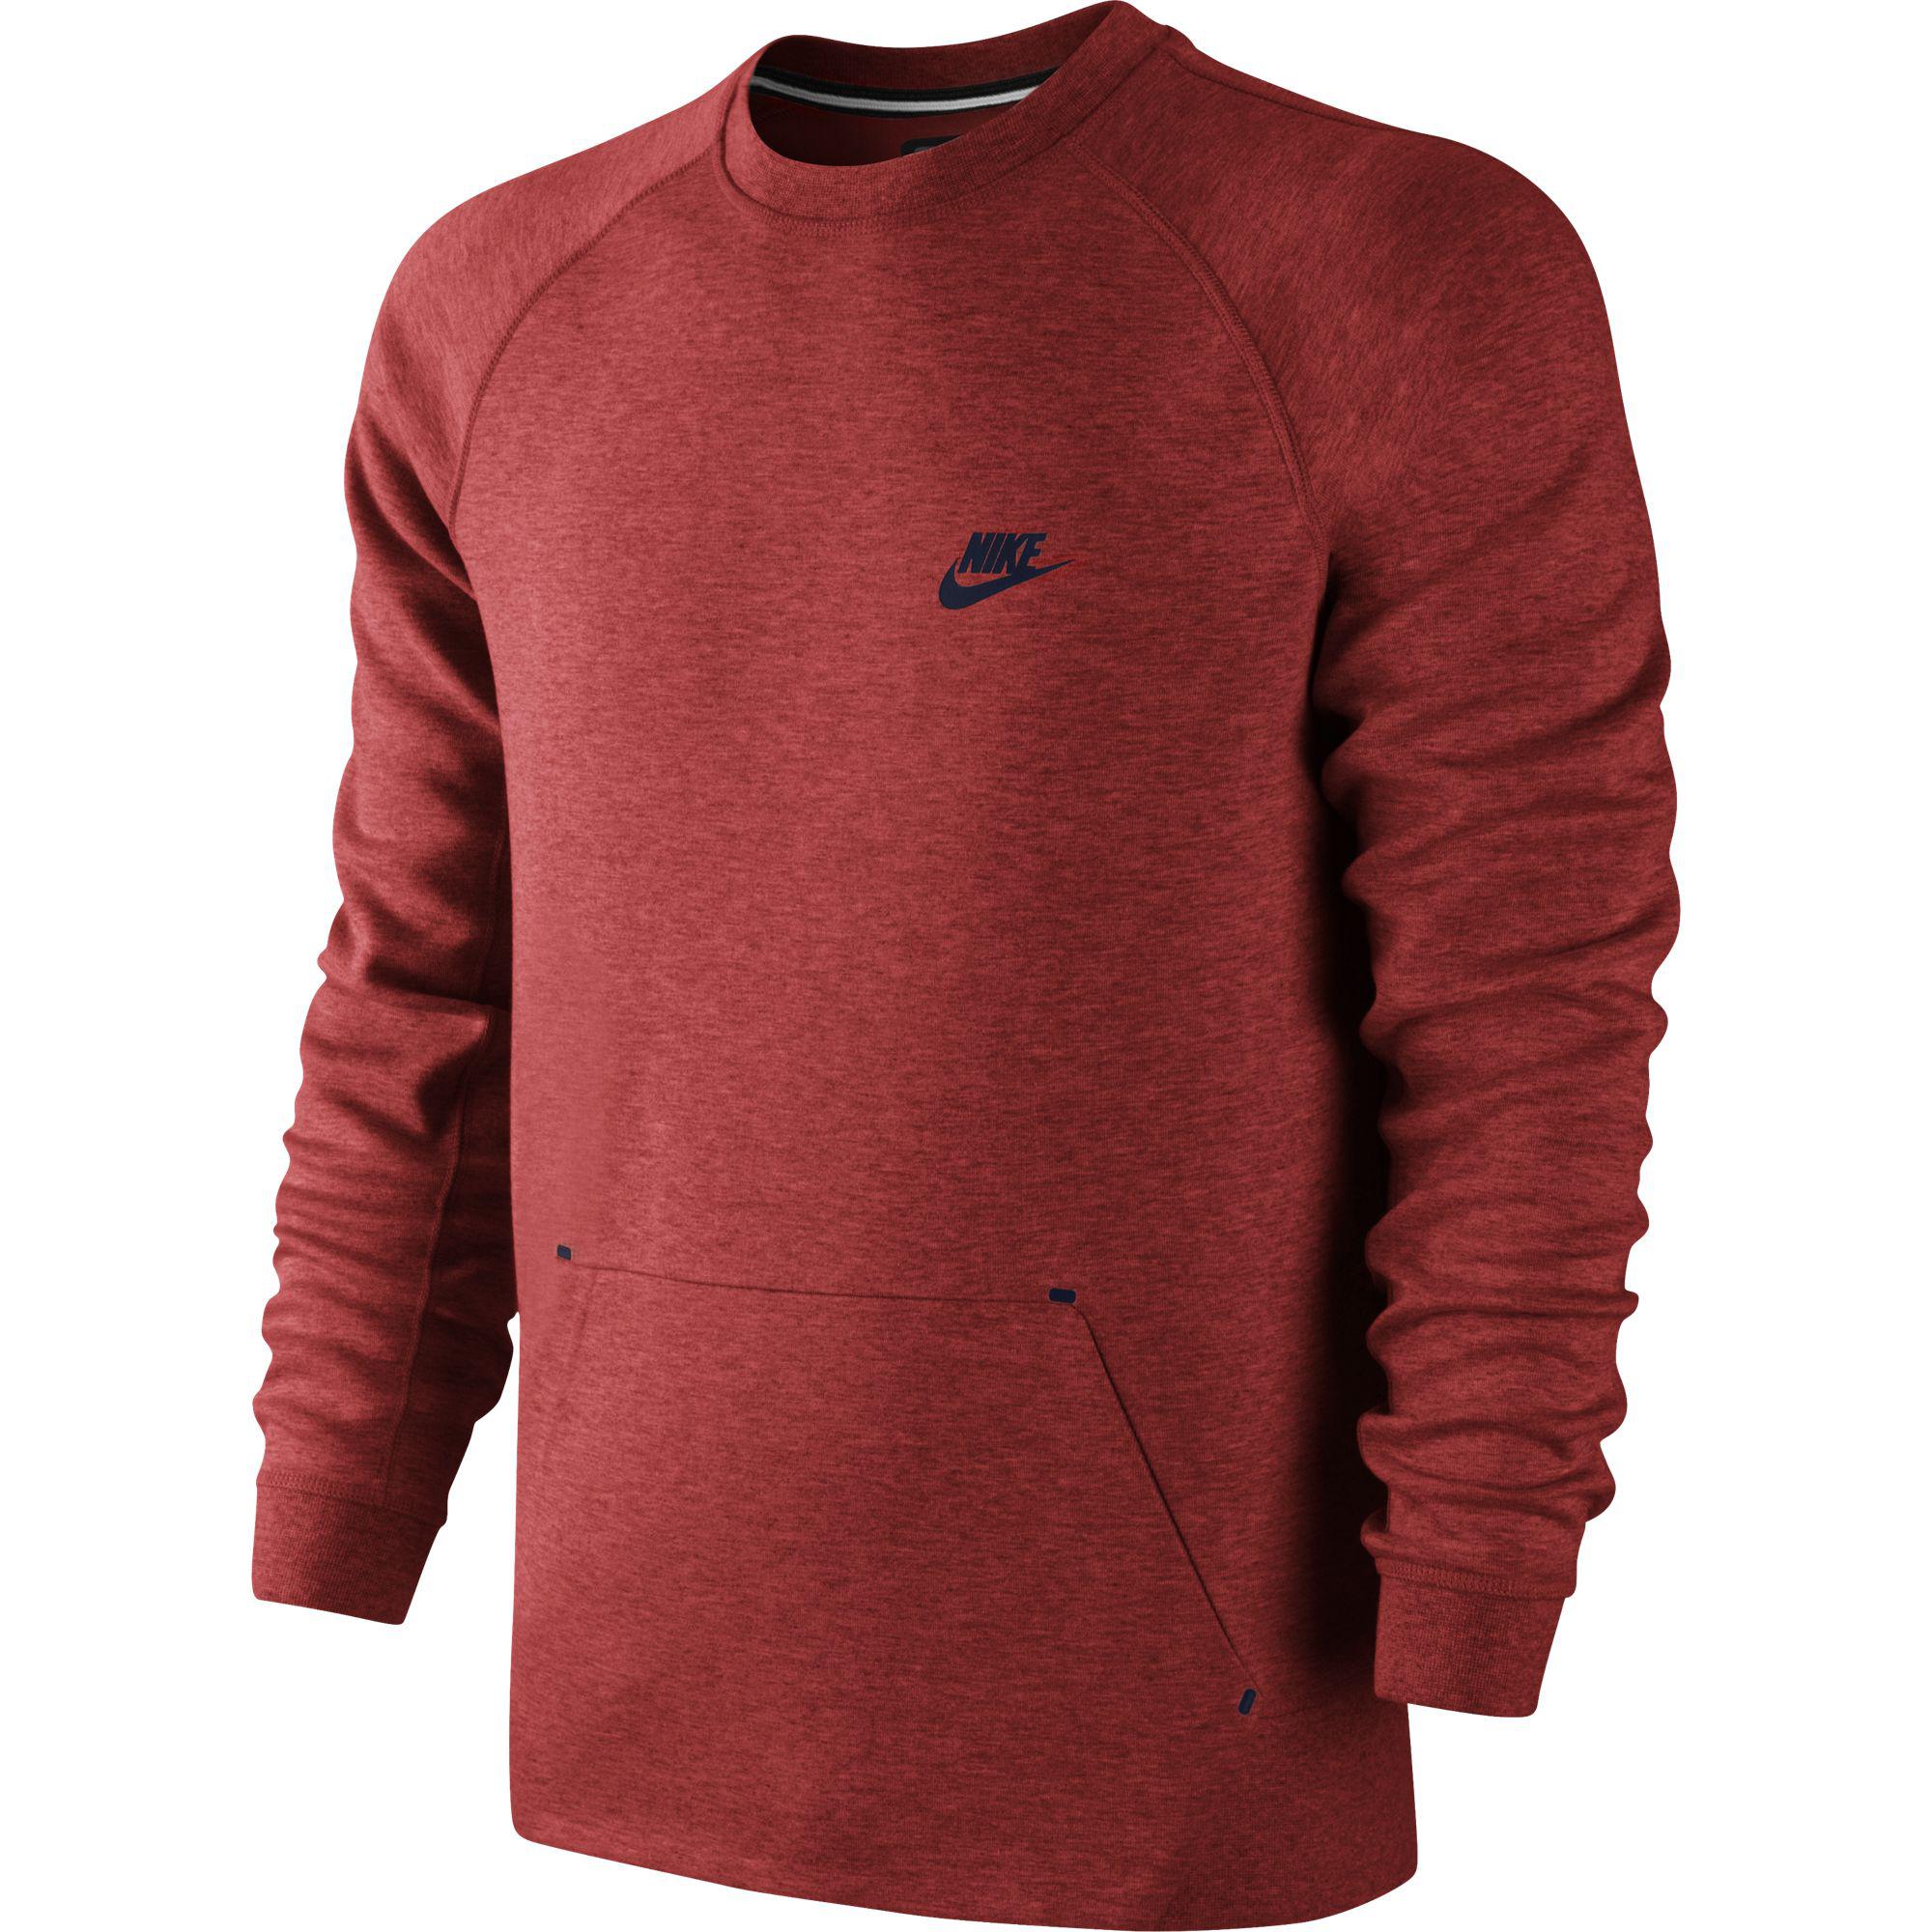 Nike Mens Tech Fleece Crew Sweatshirt - Red - Tennisnuts.com